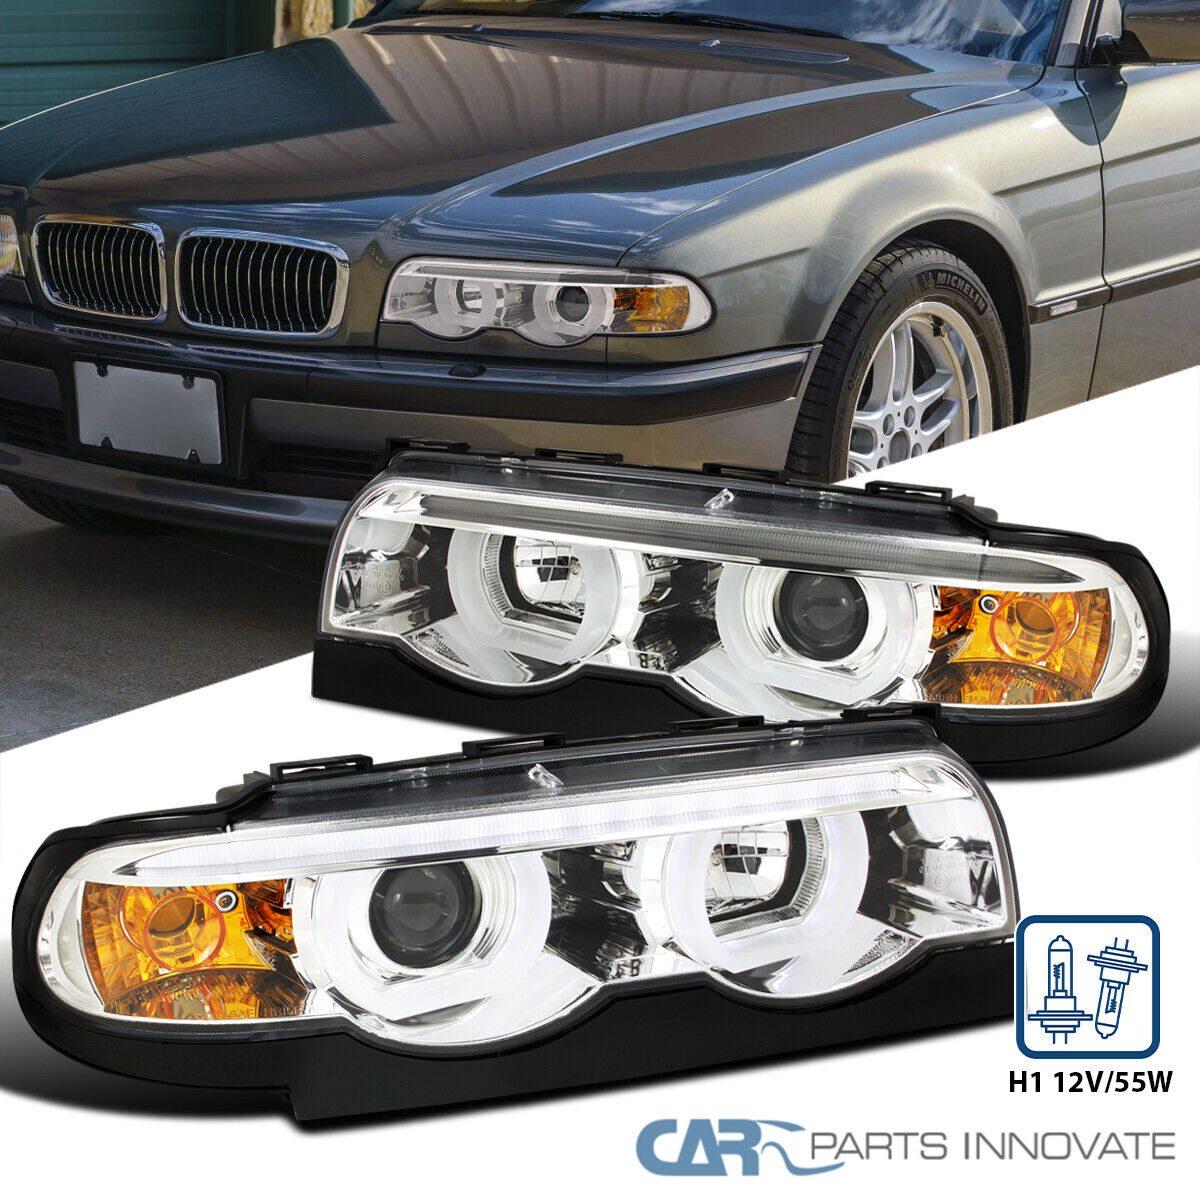 Fits 1995-2001 BMW E38 7-Series 740i 740iL 750iL Iced Halo Projector Headlights